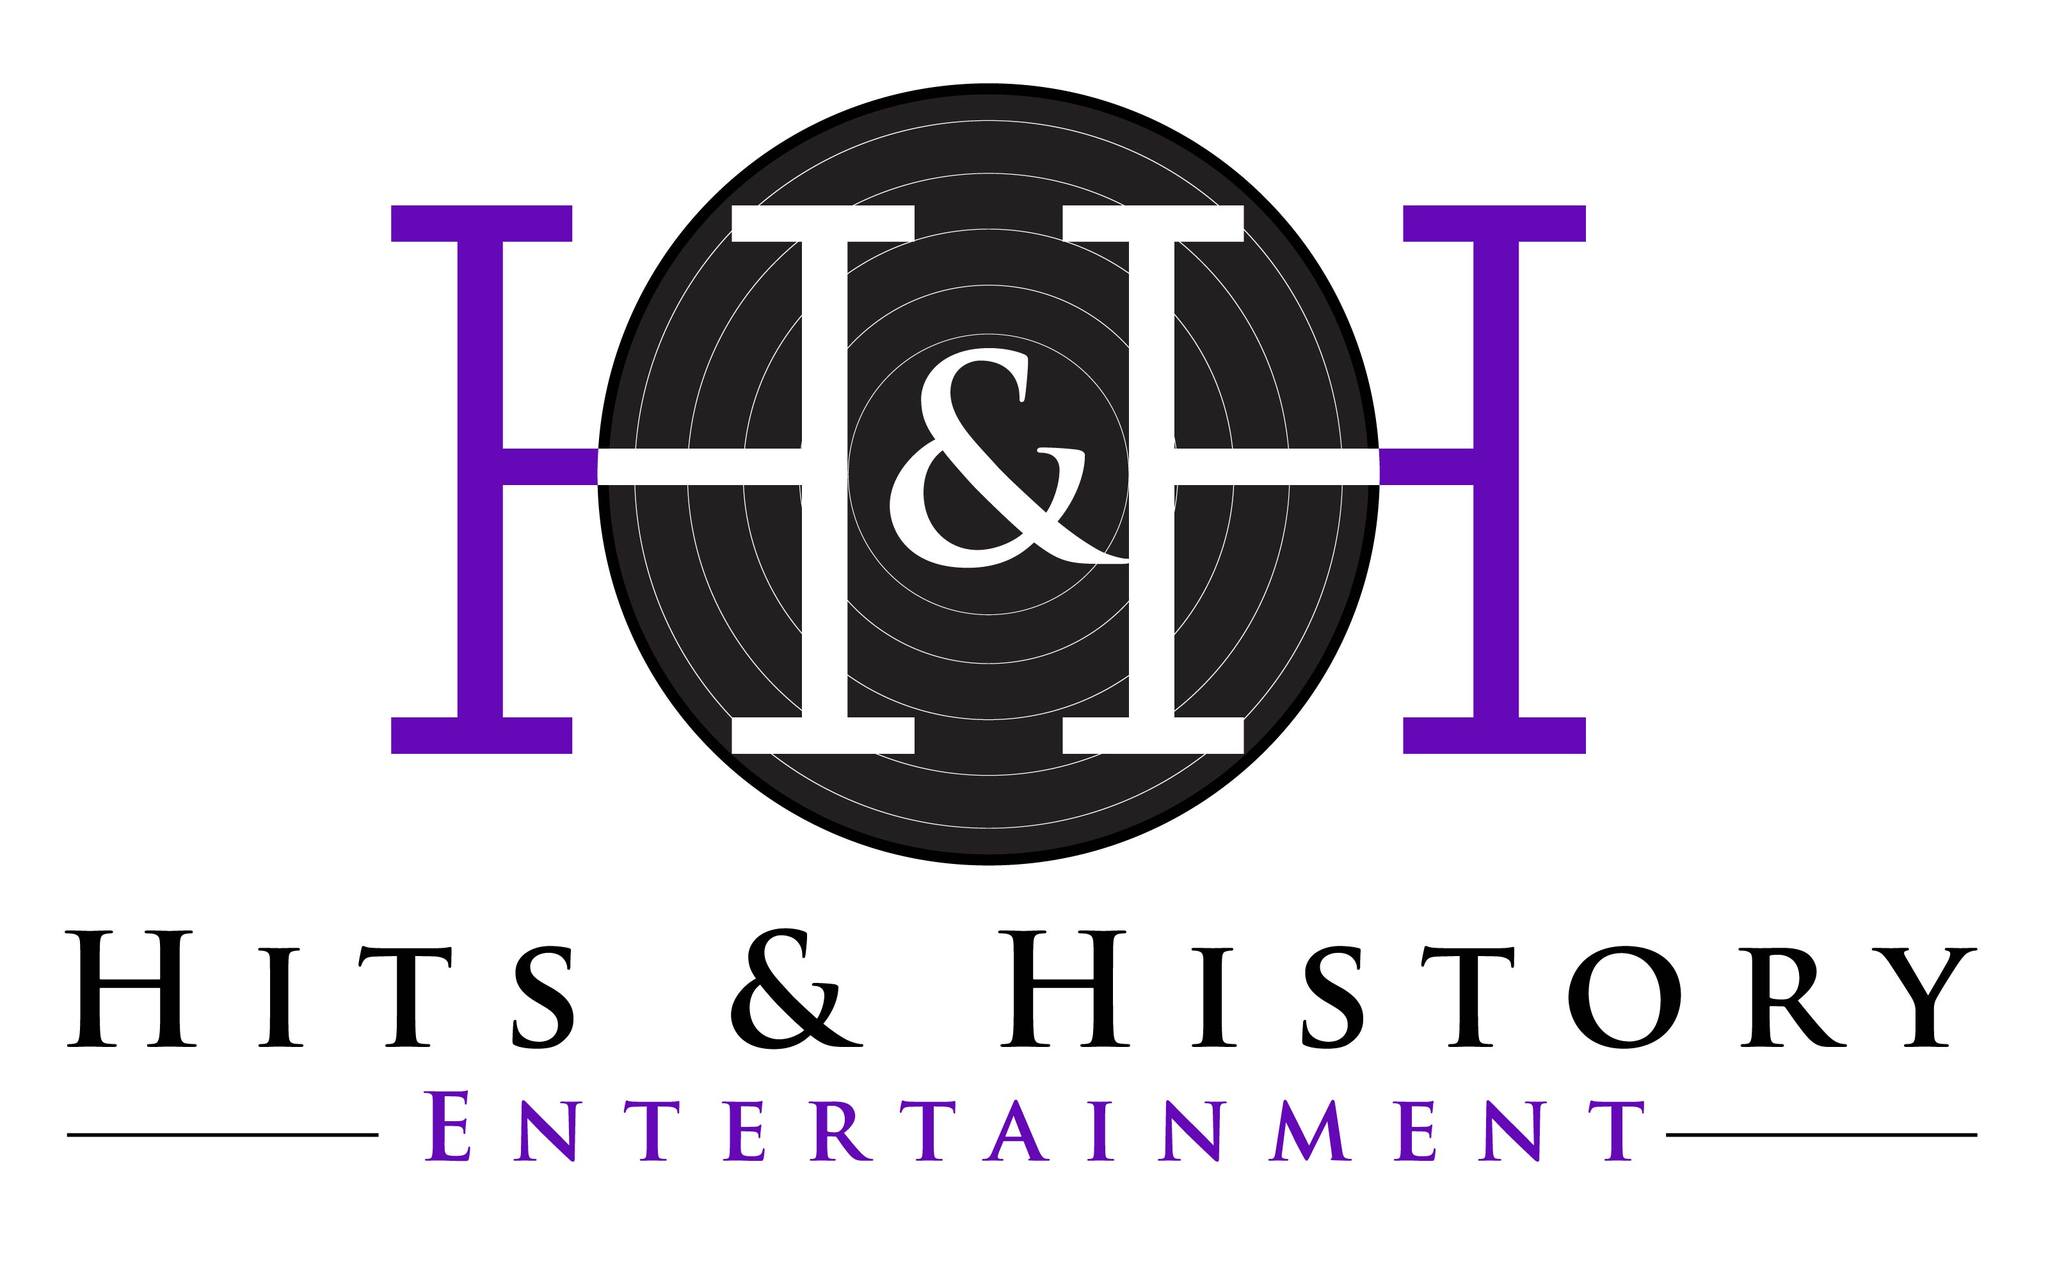 Hits & History Studios